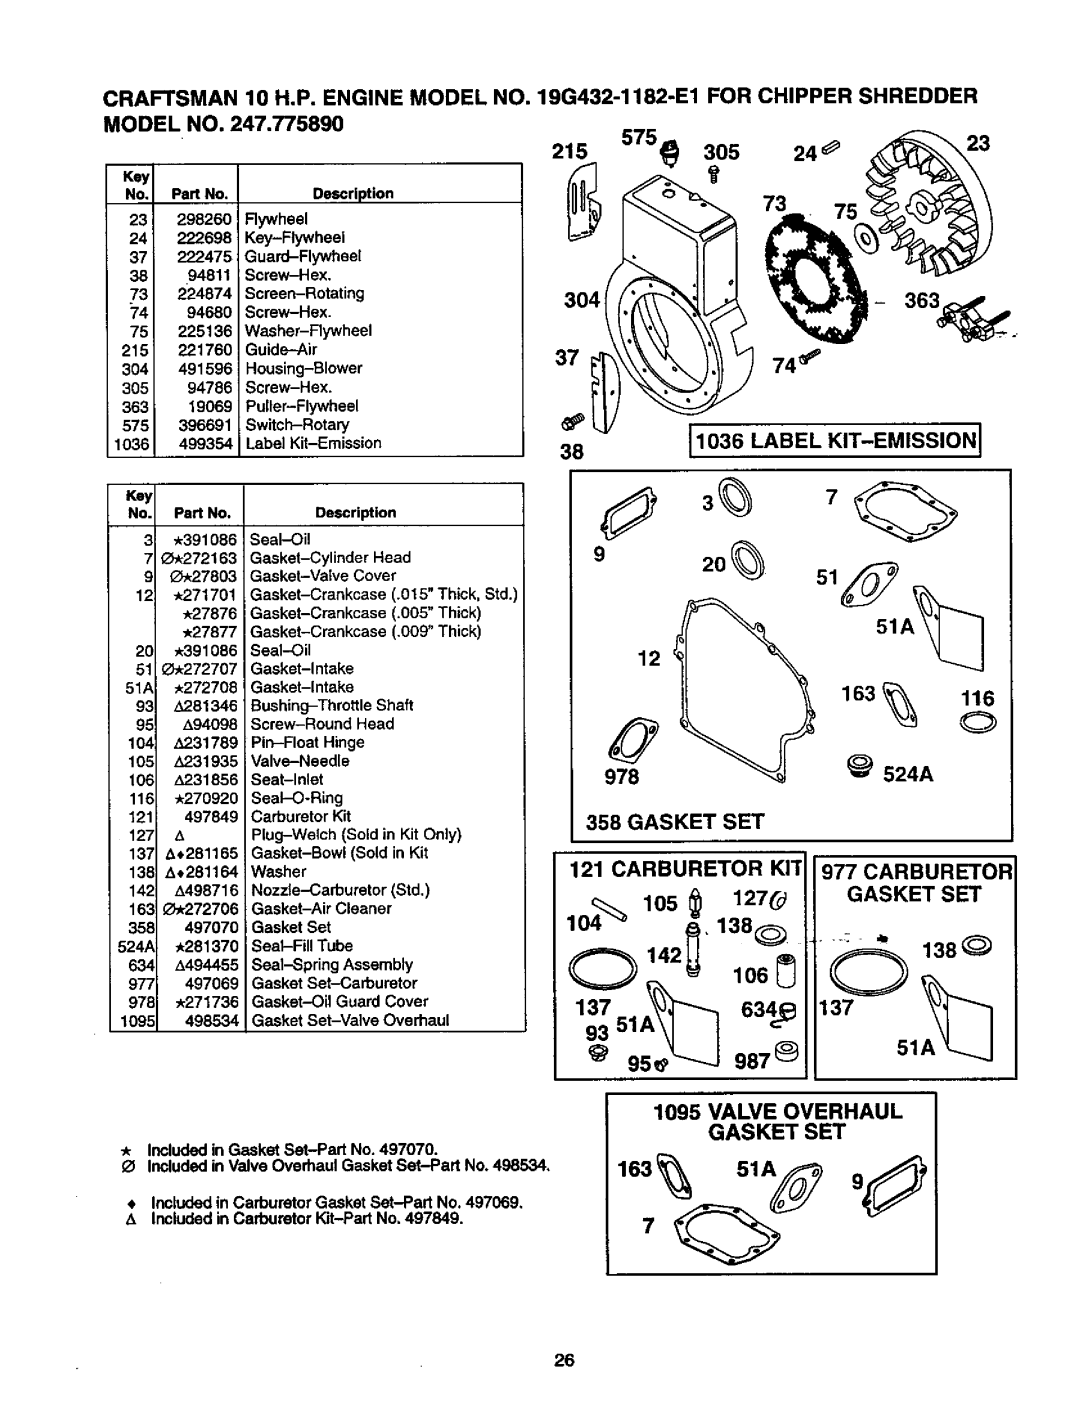 Craftsman 247.775890 manual Valve Overhaul Gasket Set 